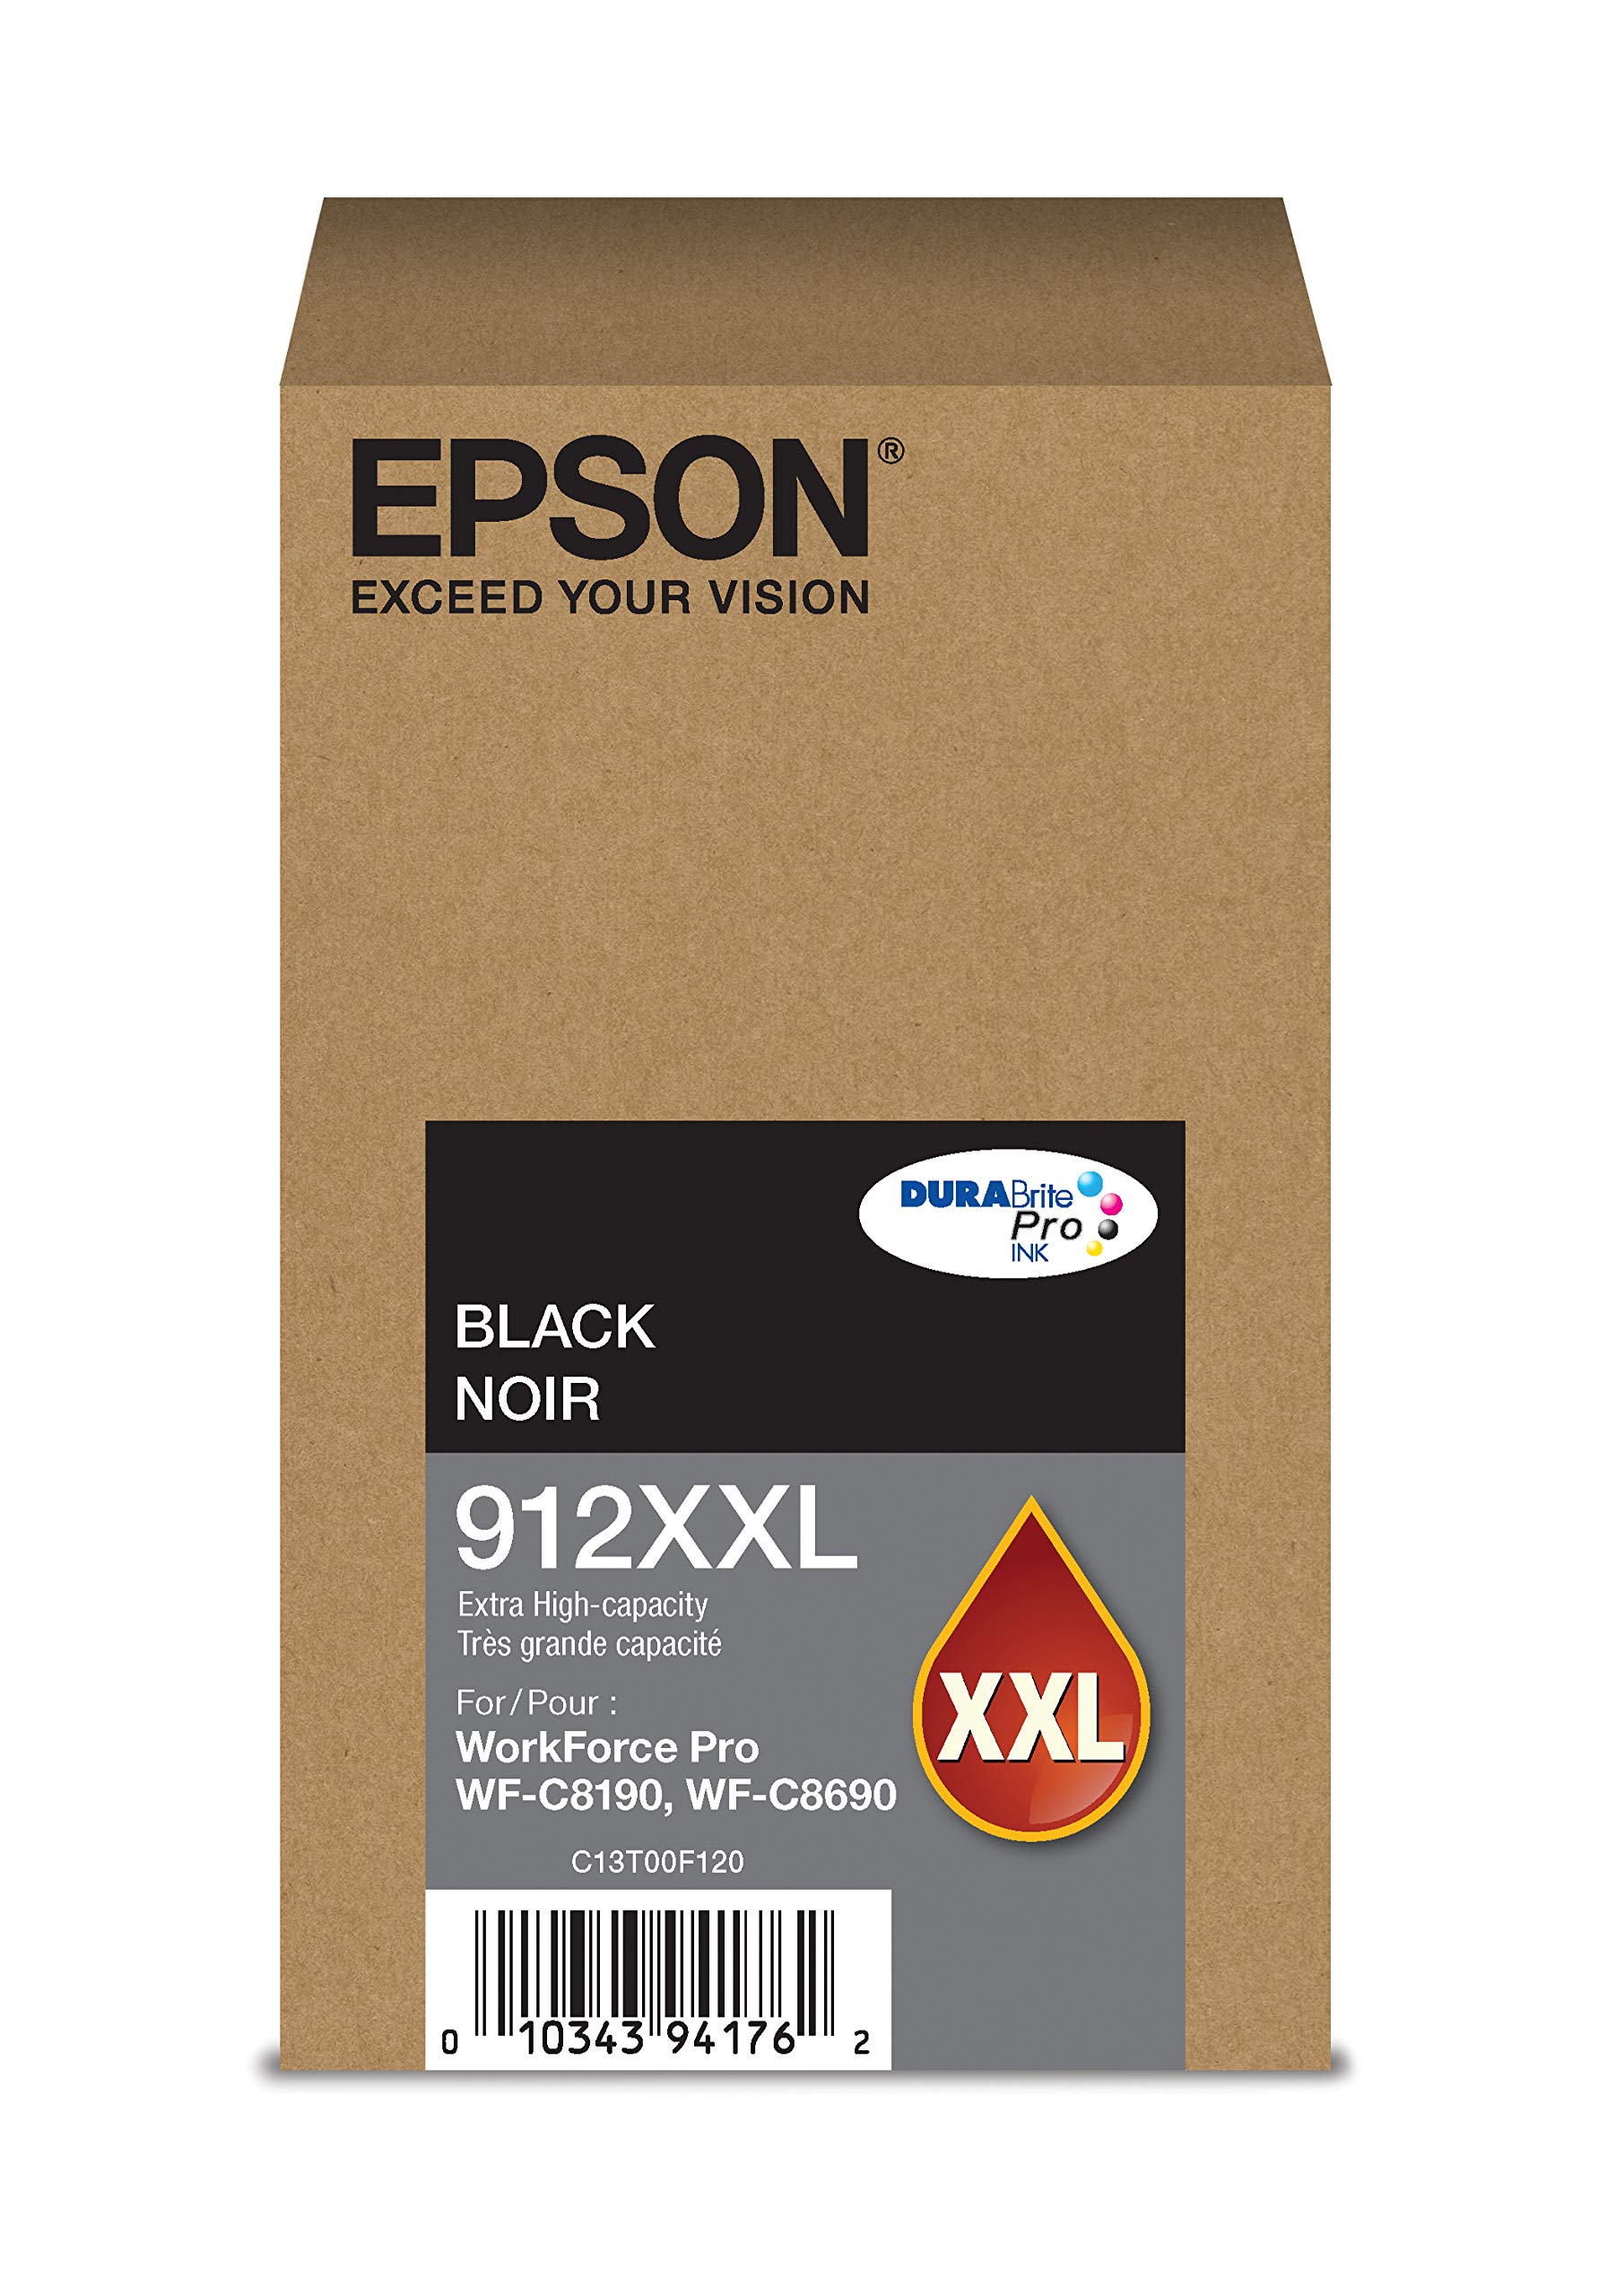 Epson DURABrite Pro T912XXL120 -잉크 -카트리지 - 초대용량 블랙